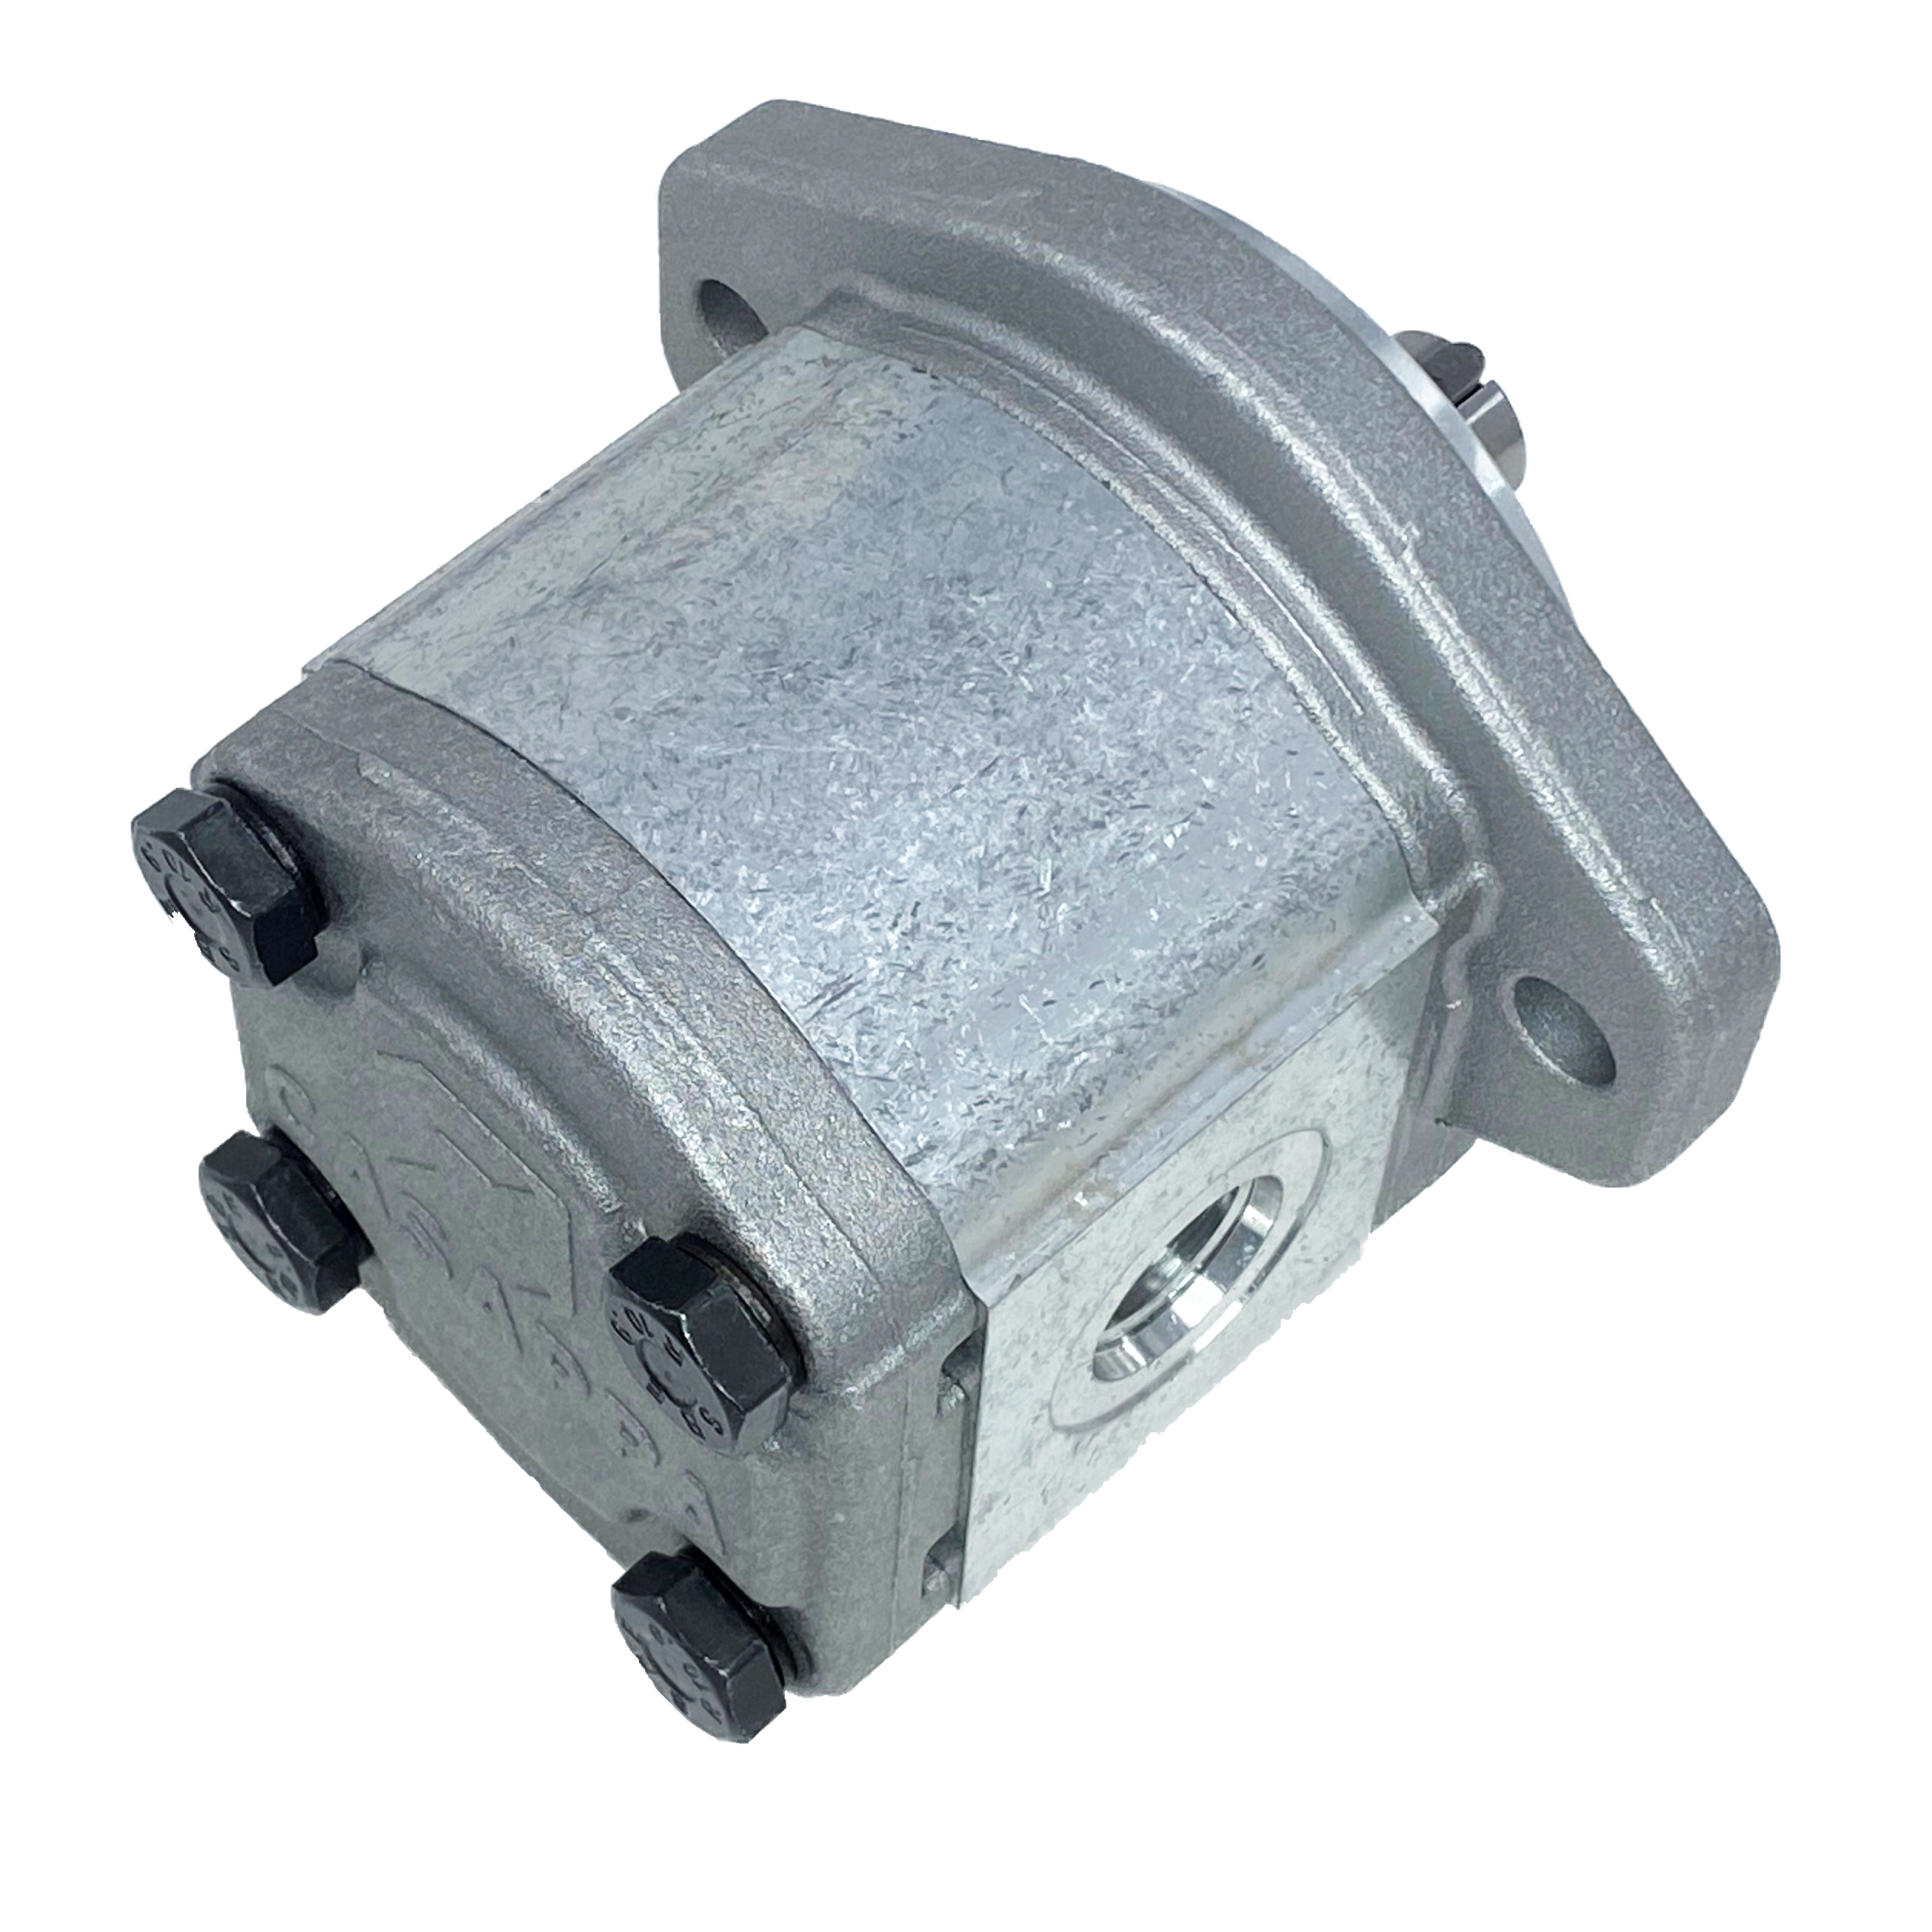 PLM20.6,3R0-50S1-LOC/OC-N-EL : Casappa Polaris Gear Motor, 6.61cc, 3625psi Rated, 4000RPM, Reversible Rear External Drain, 3/4" Bore x 3/16" Key Shaft, SAE A 2-Bolt Flange, 0.625 (5/8") #10 SAE Inlet, 0.625 (5/8") #10 SAE Outlet, Aluminum Body & Flange